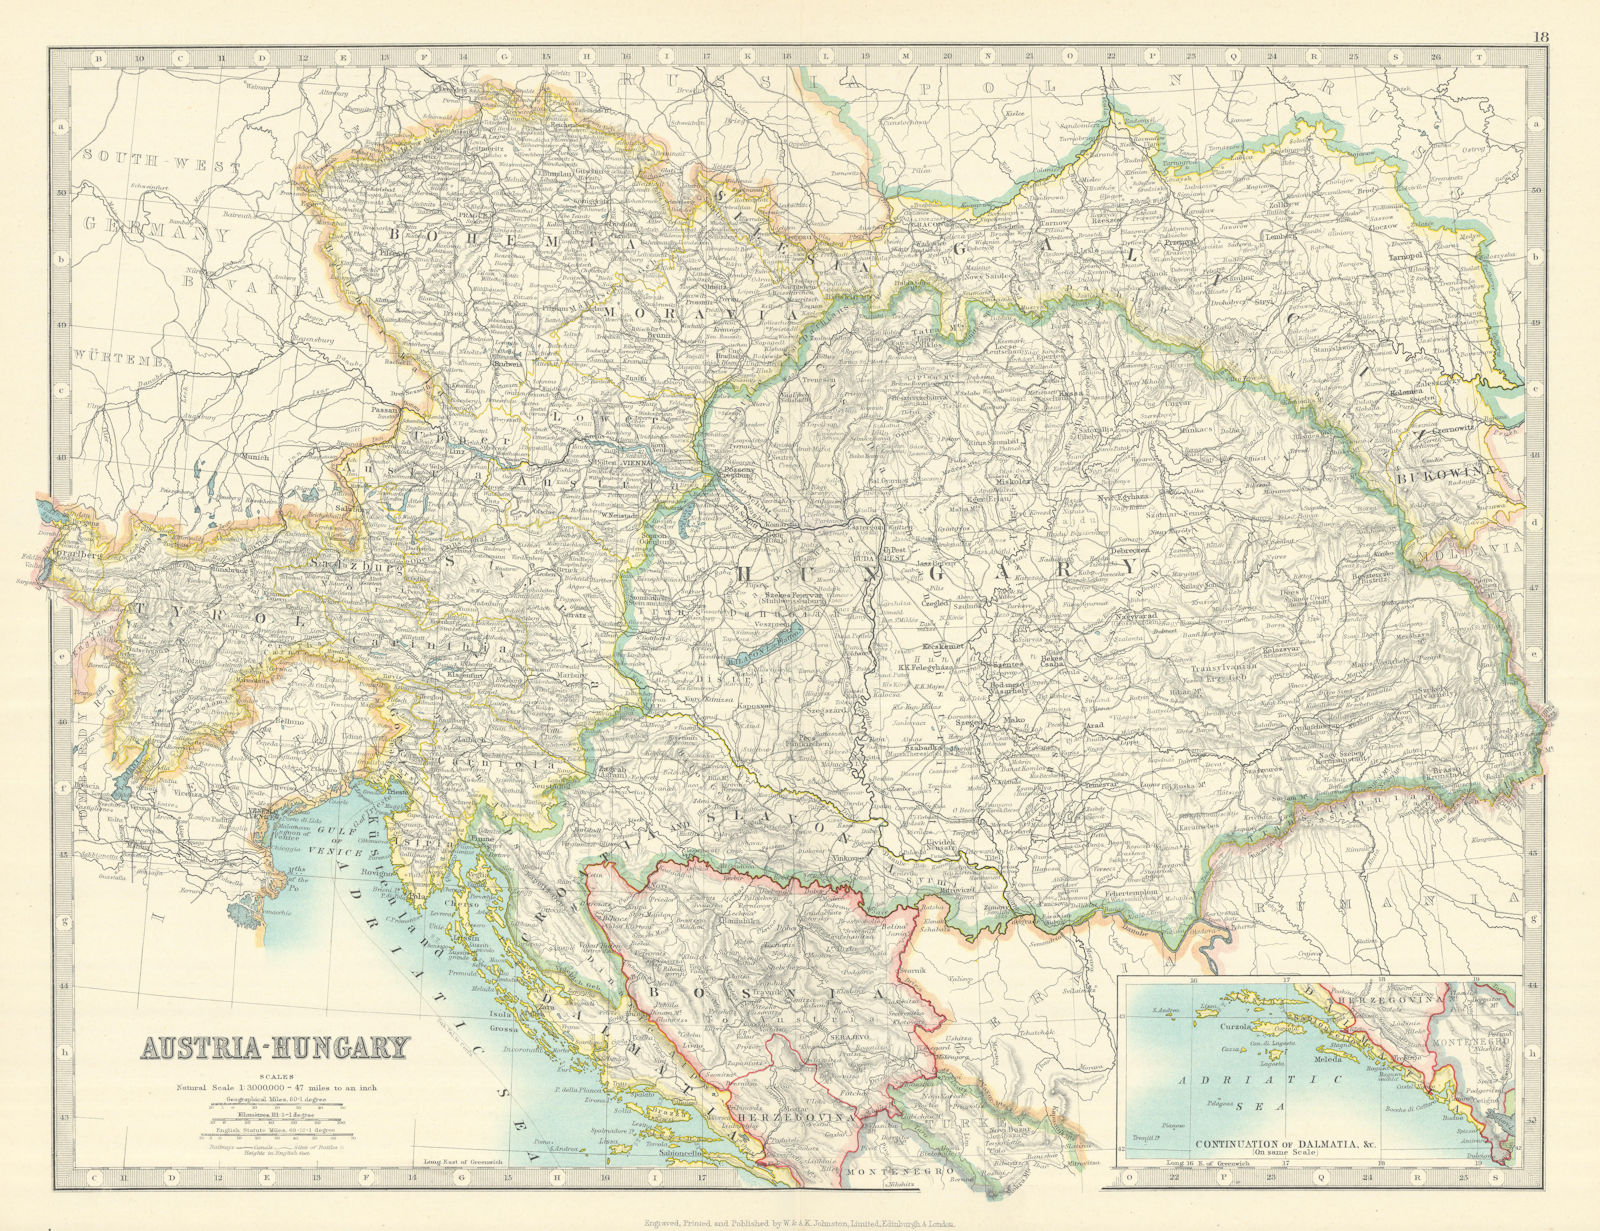 AUSTRIA-HUNGARY. Dalmatian coast. Bosnia. Railways. JOHNSTON 1913 old map